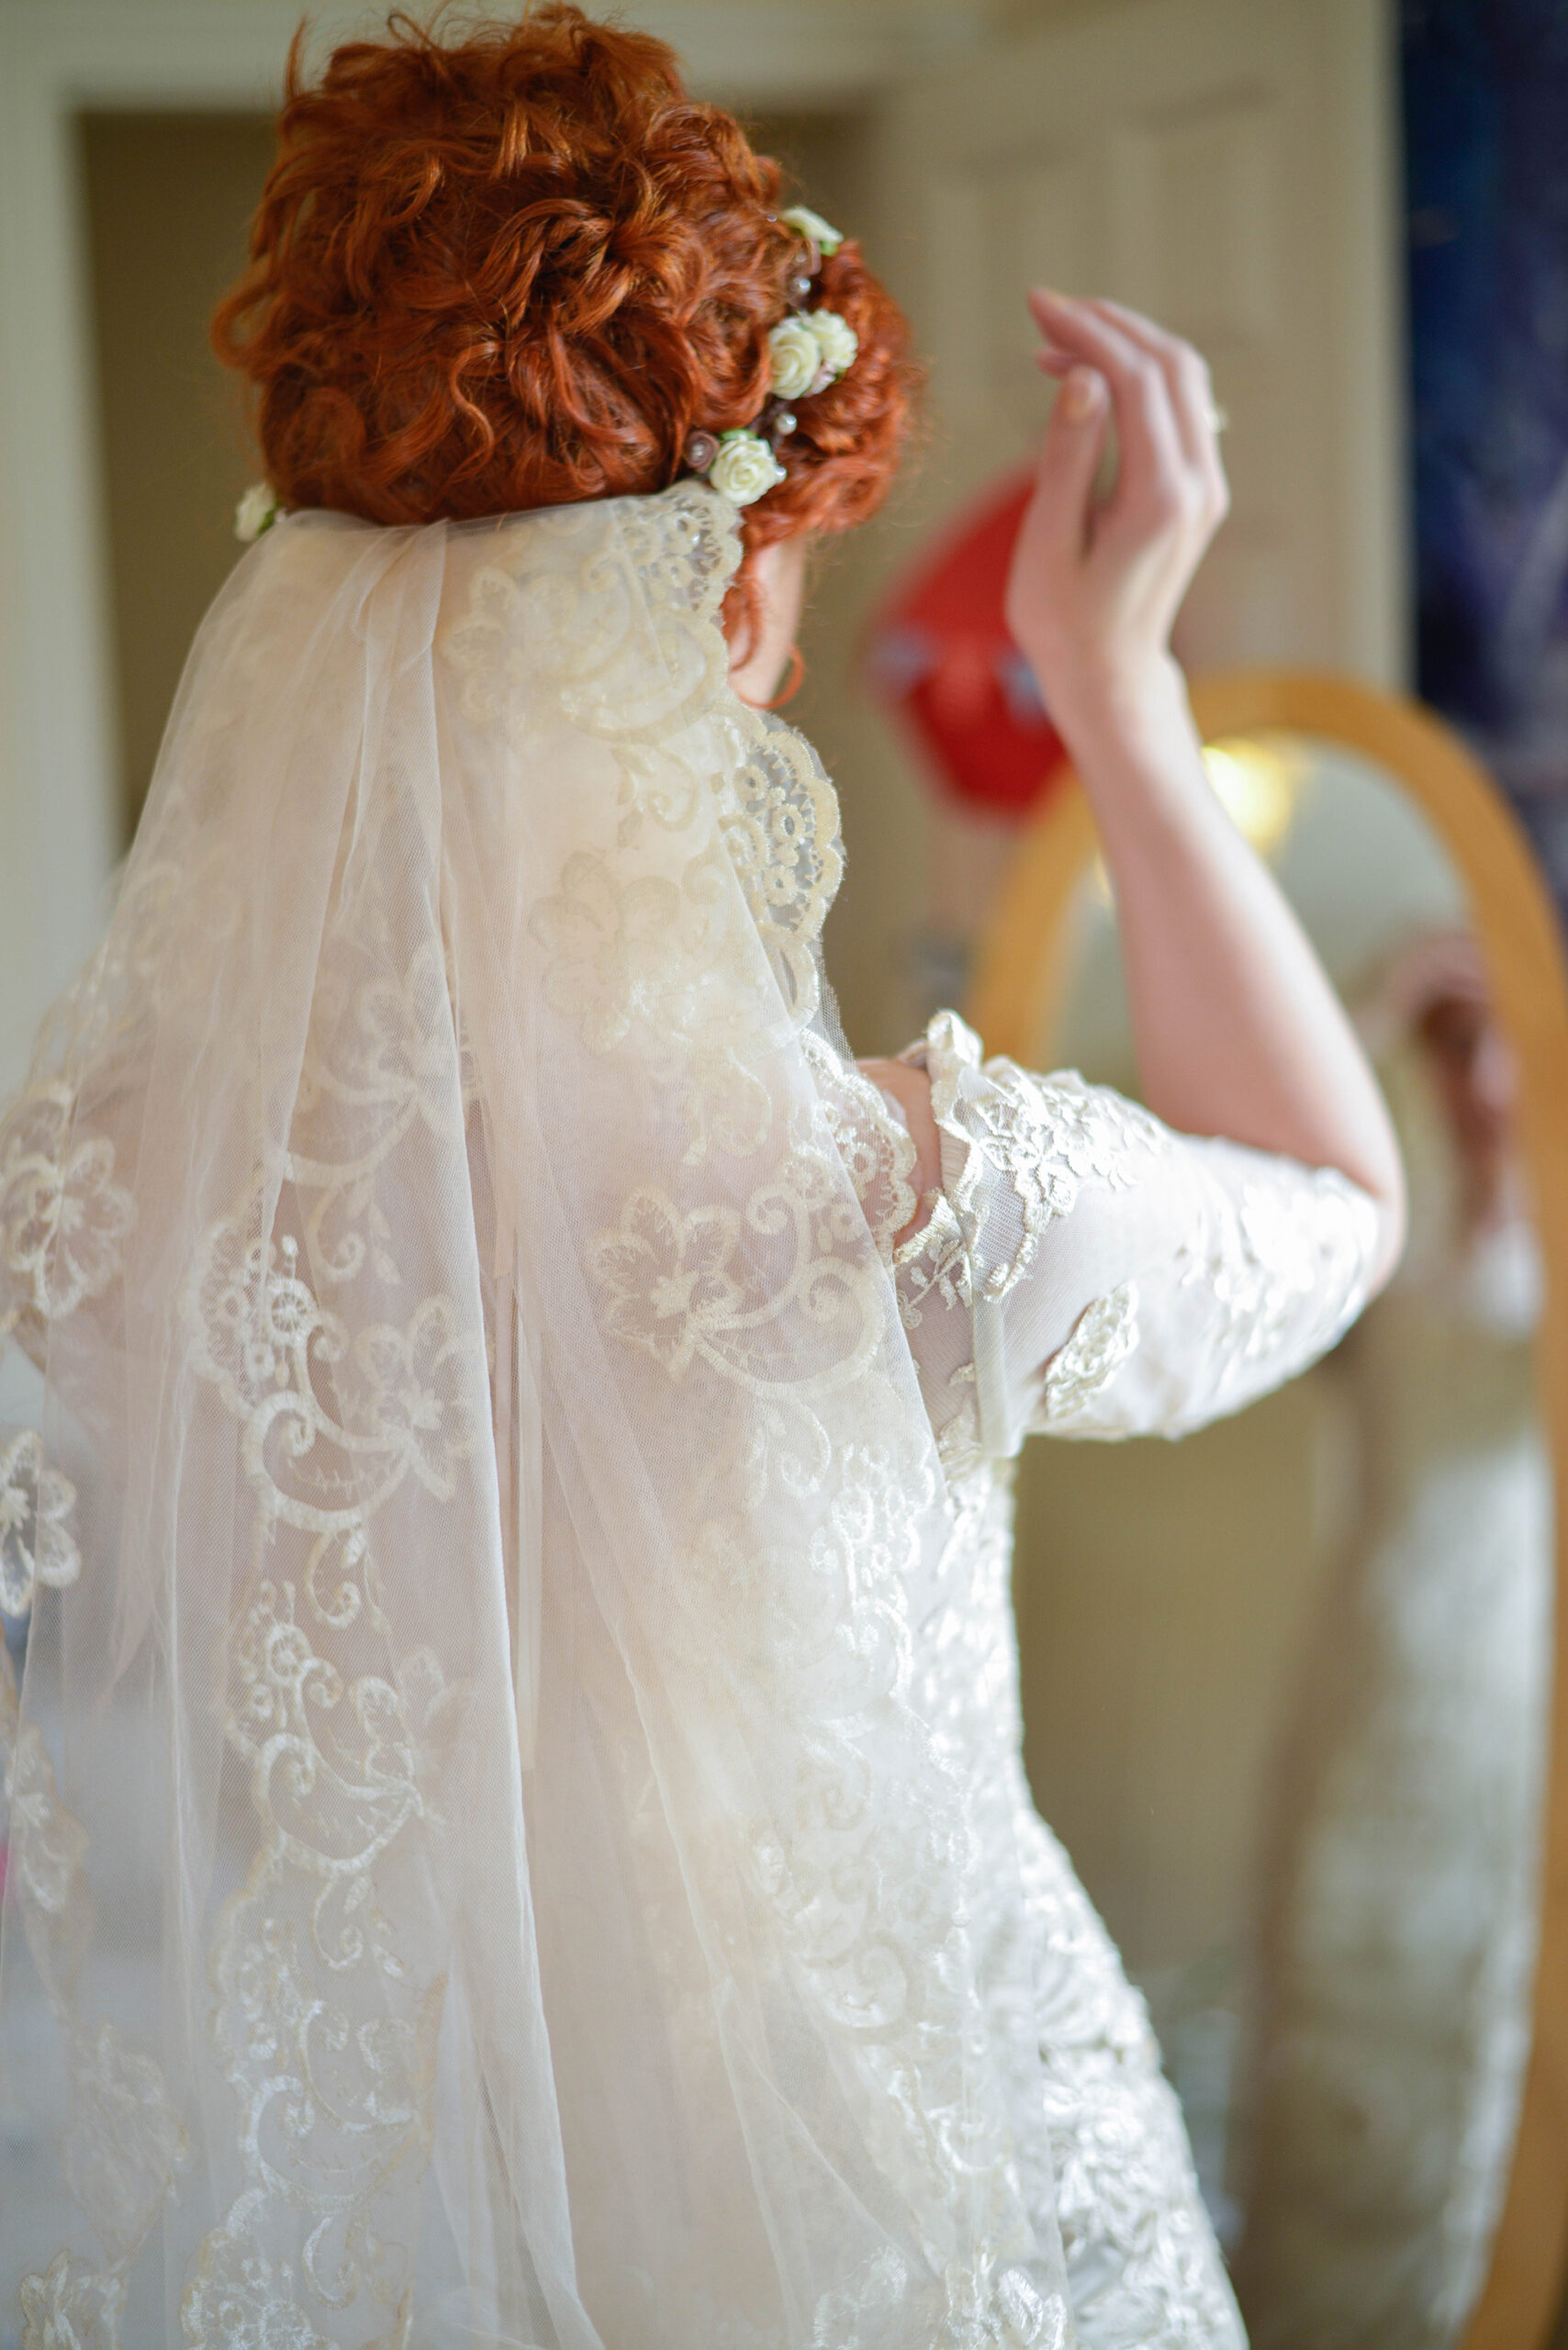 Heather_Darrell_Homemade-Rustic-Wedding_Kimberley-Waterson-Fine-Art-Photography_008